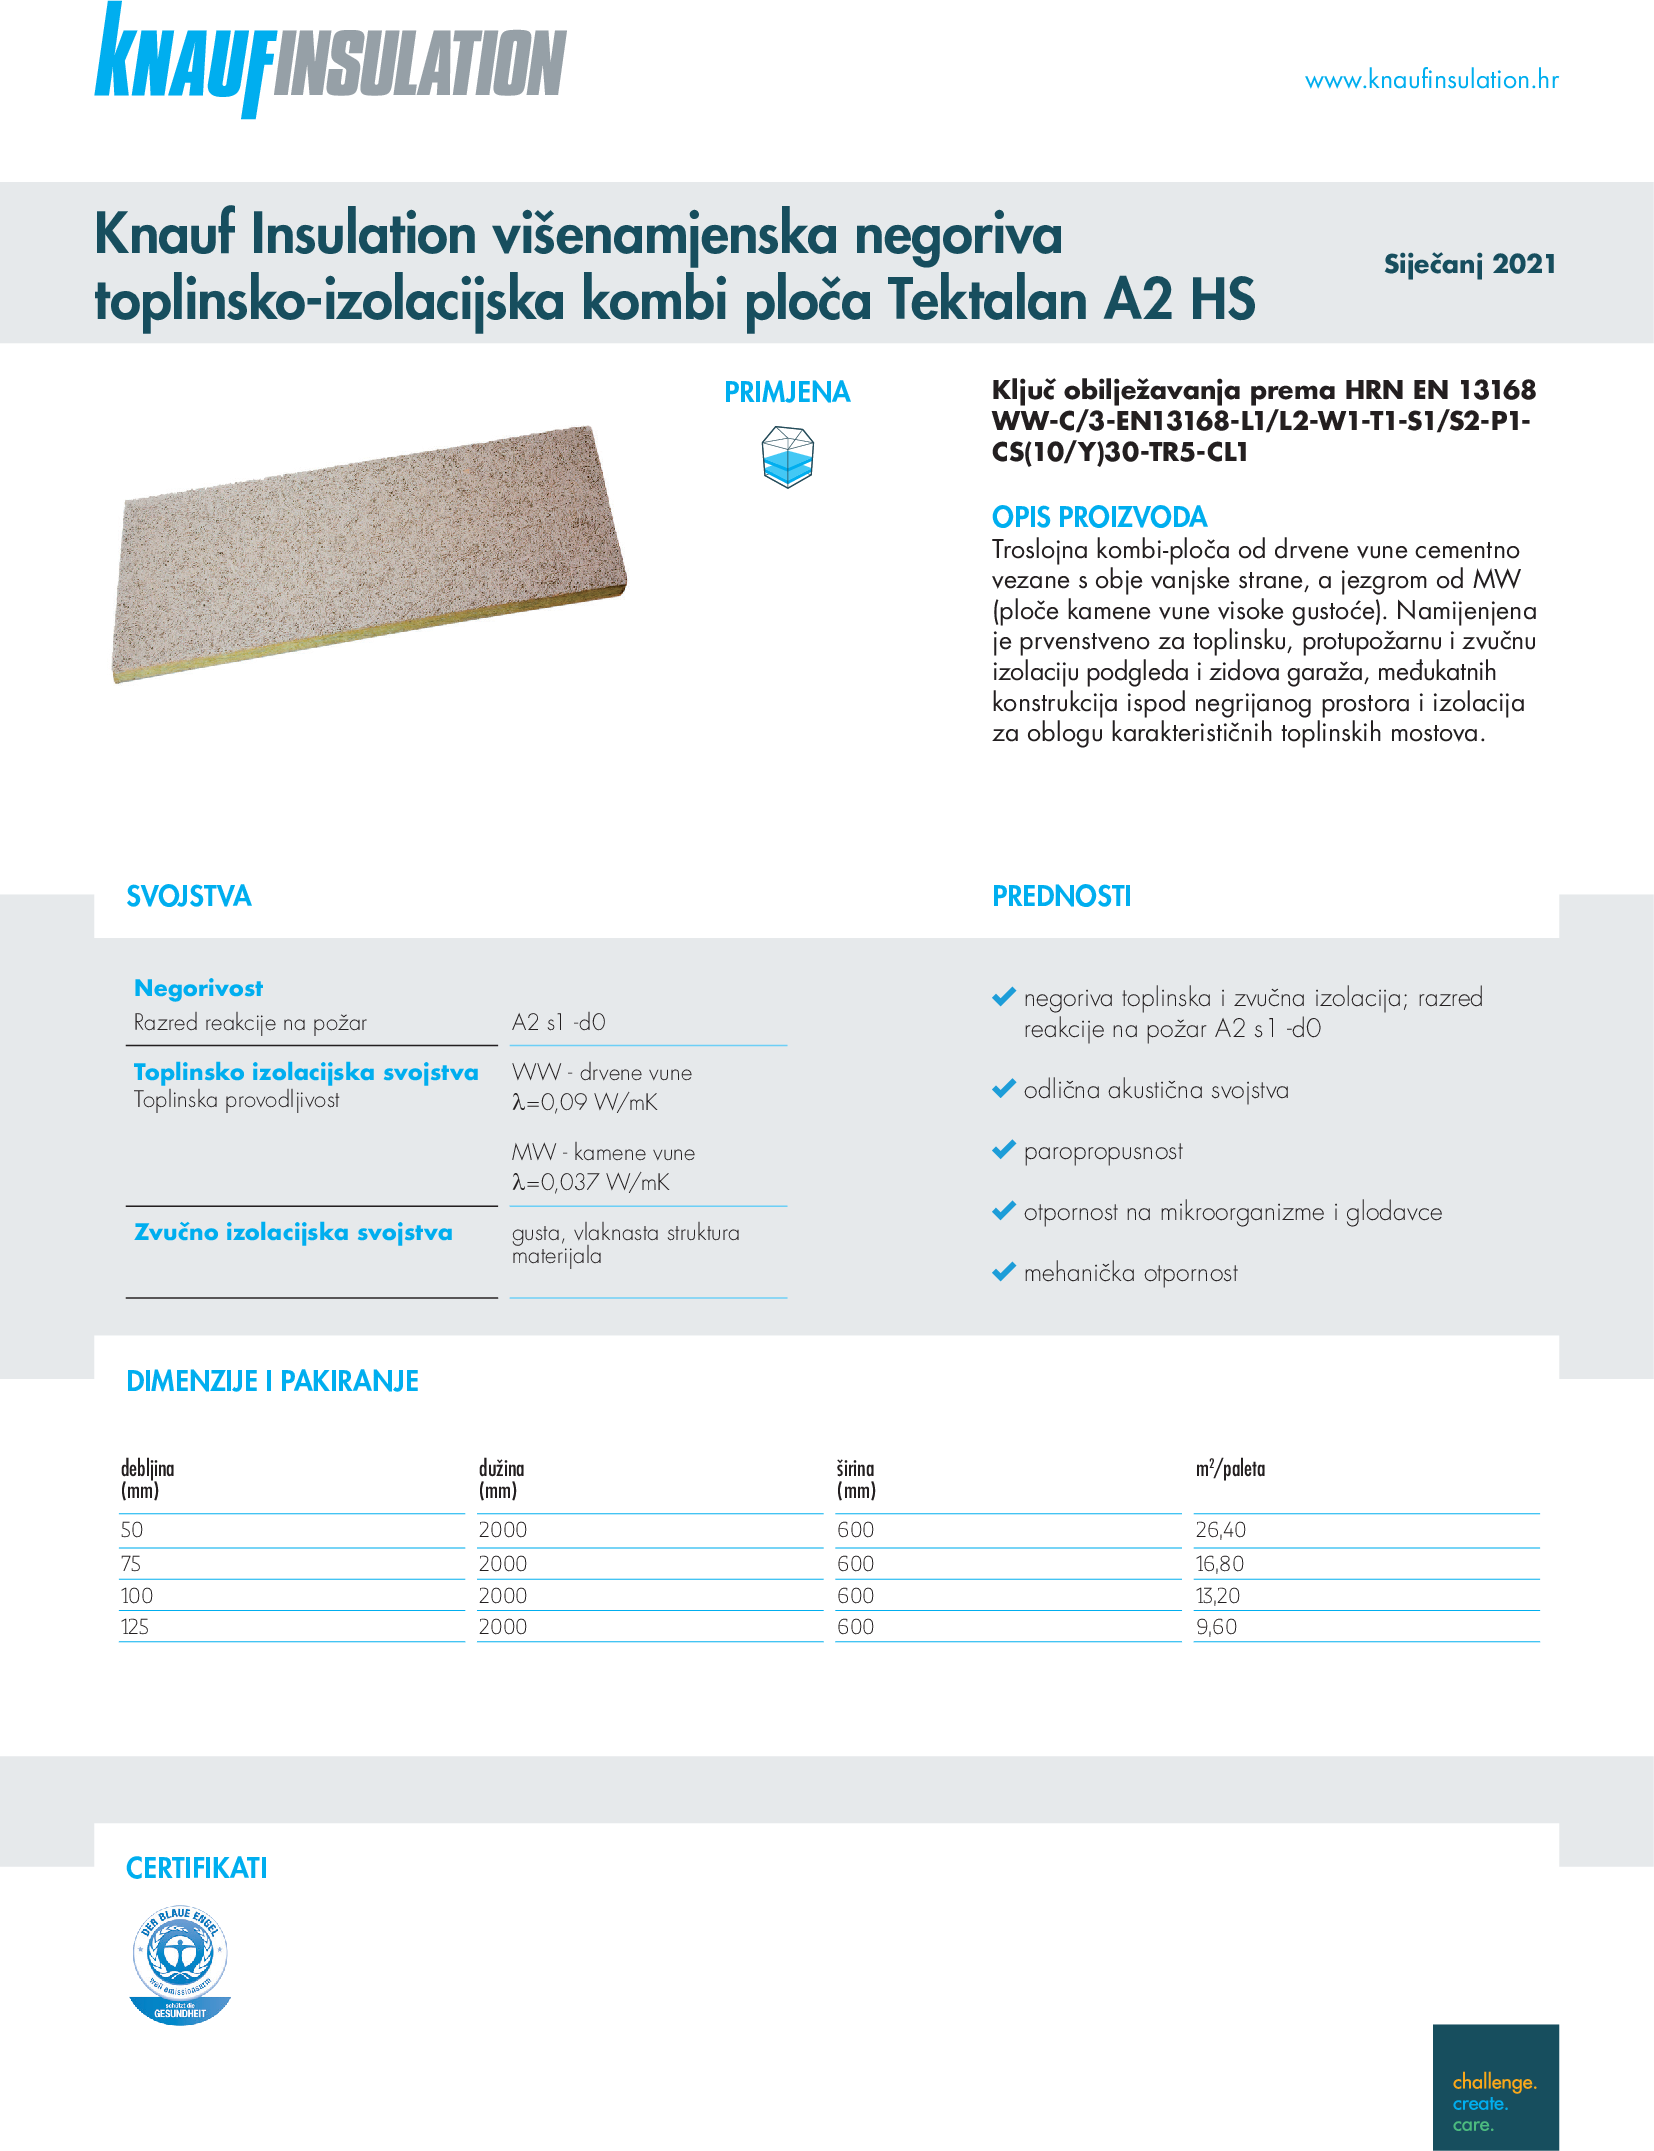 Knauf Insulation višenamjenska negoriva toplinsko-izolacijska kombi ploča Tektalan A2 HS